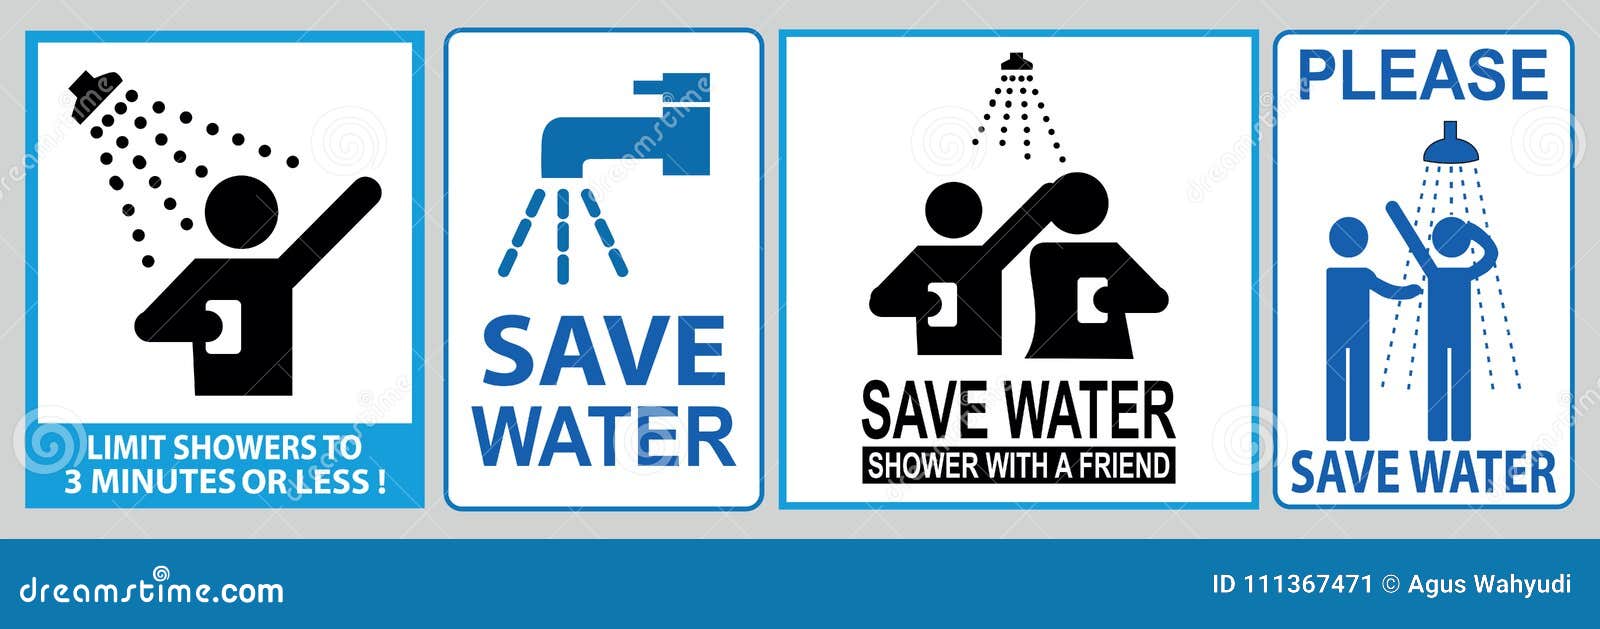 Save Water For Bathroom Stock Illustration Illustration Of Leaks 111367471